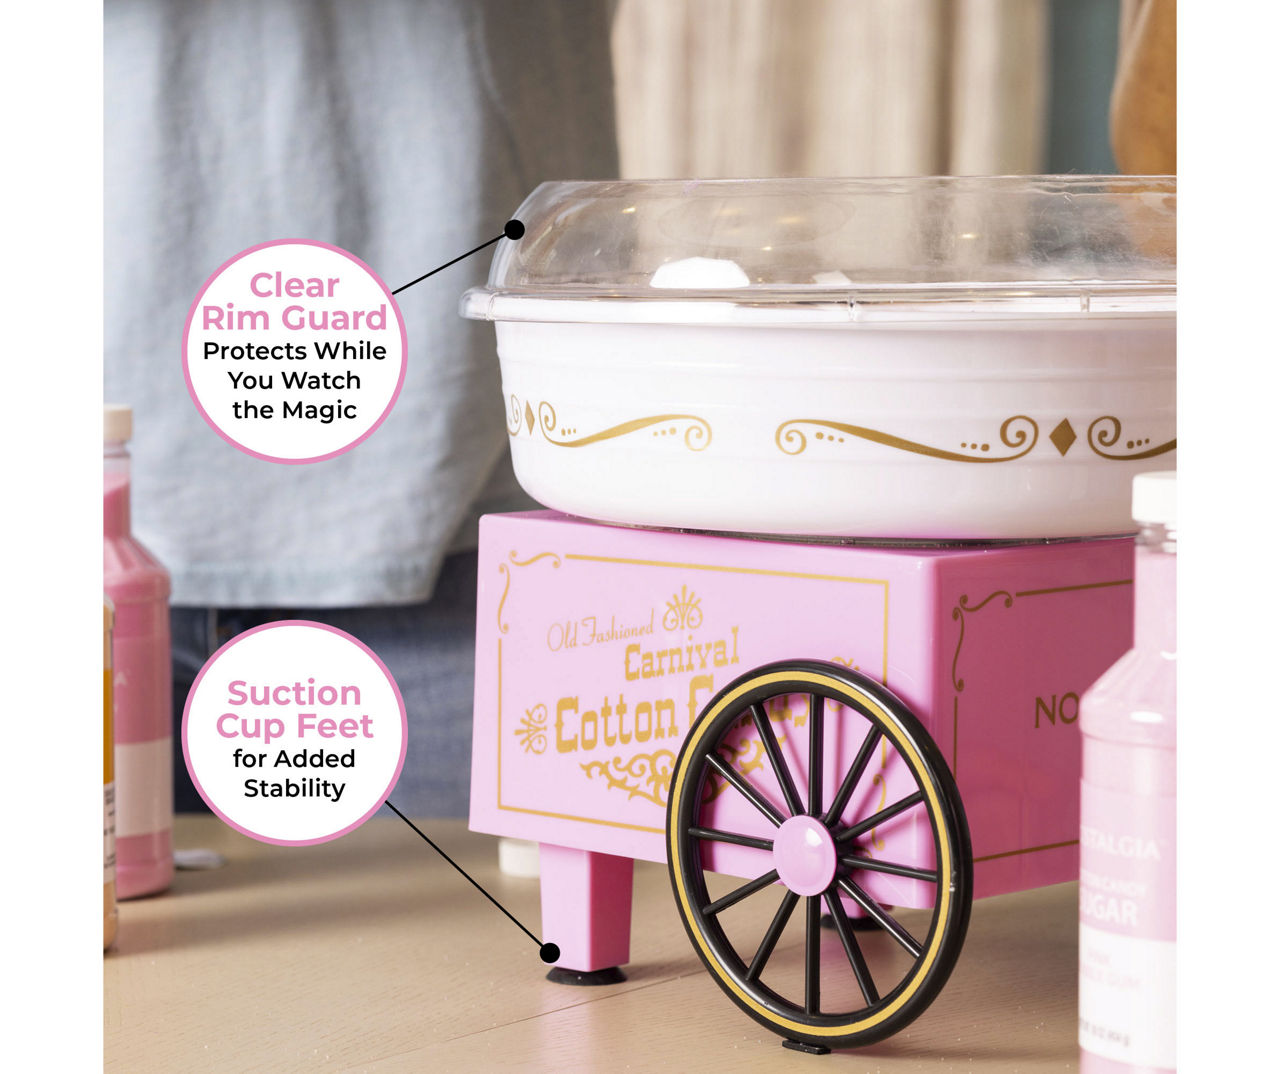 Nostalgia Pink Cotton Candy Machine Cotton Candy Maker in the Cotton Candy  Machines department at